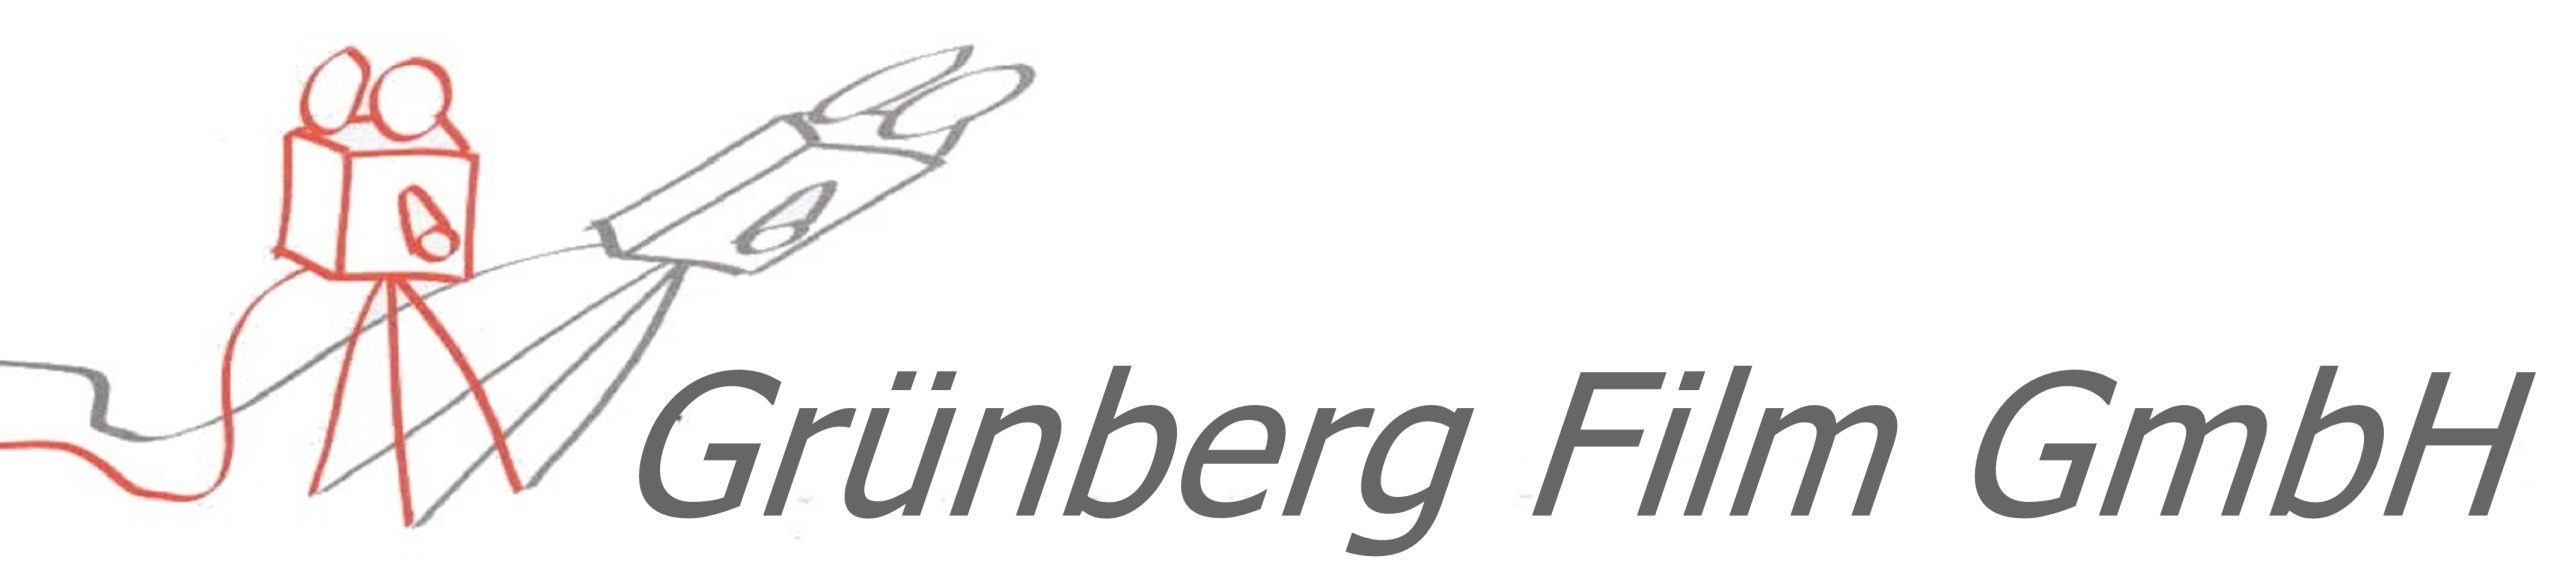 Grünberg Film GmbH